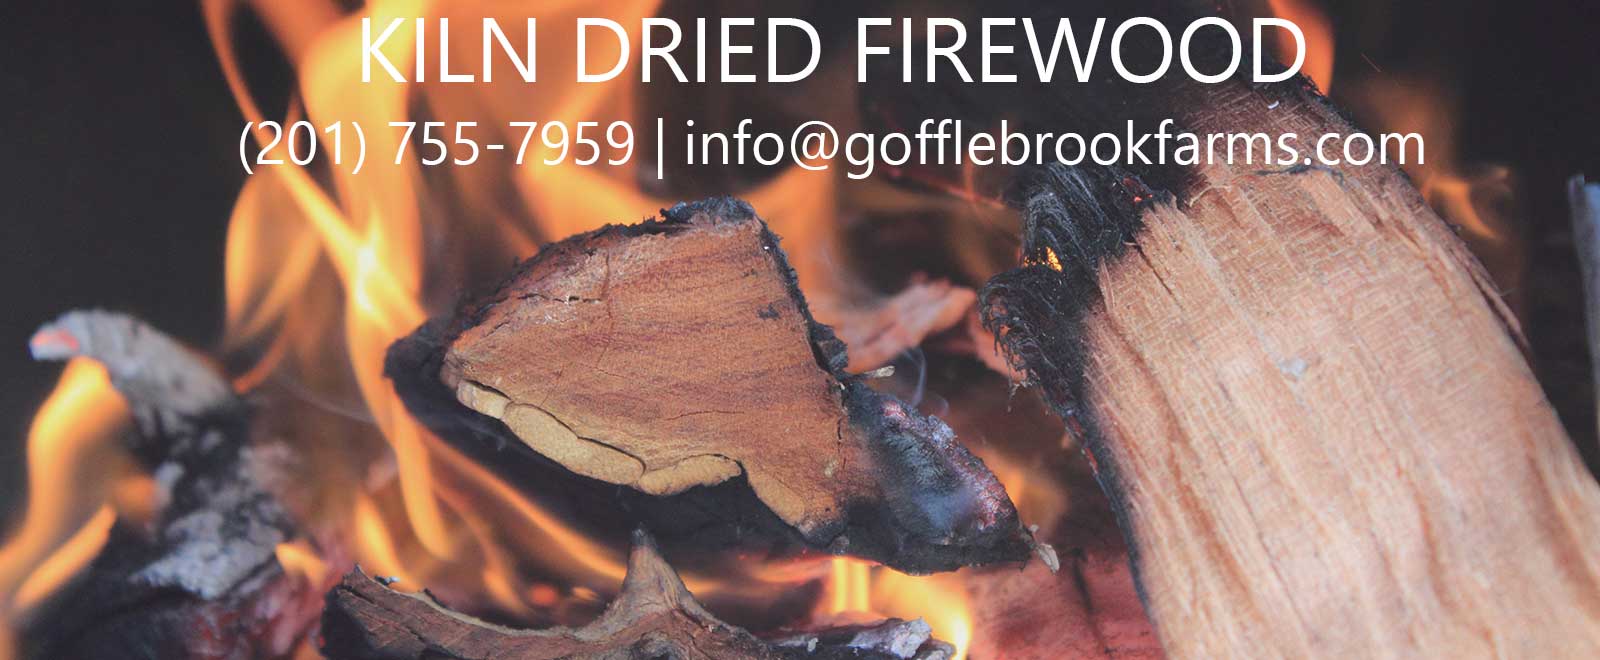 Kiln Dried Firewood at Goffle Brook Farms